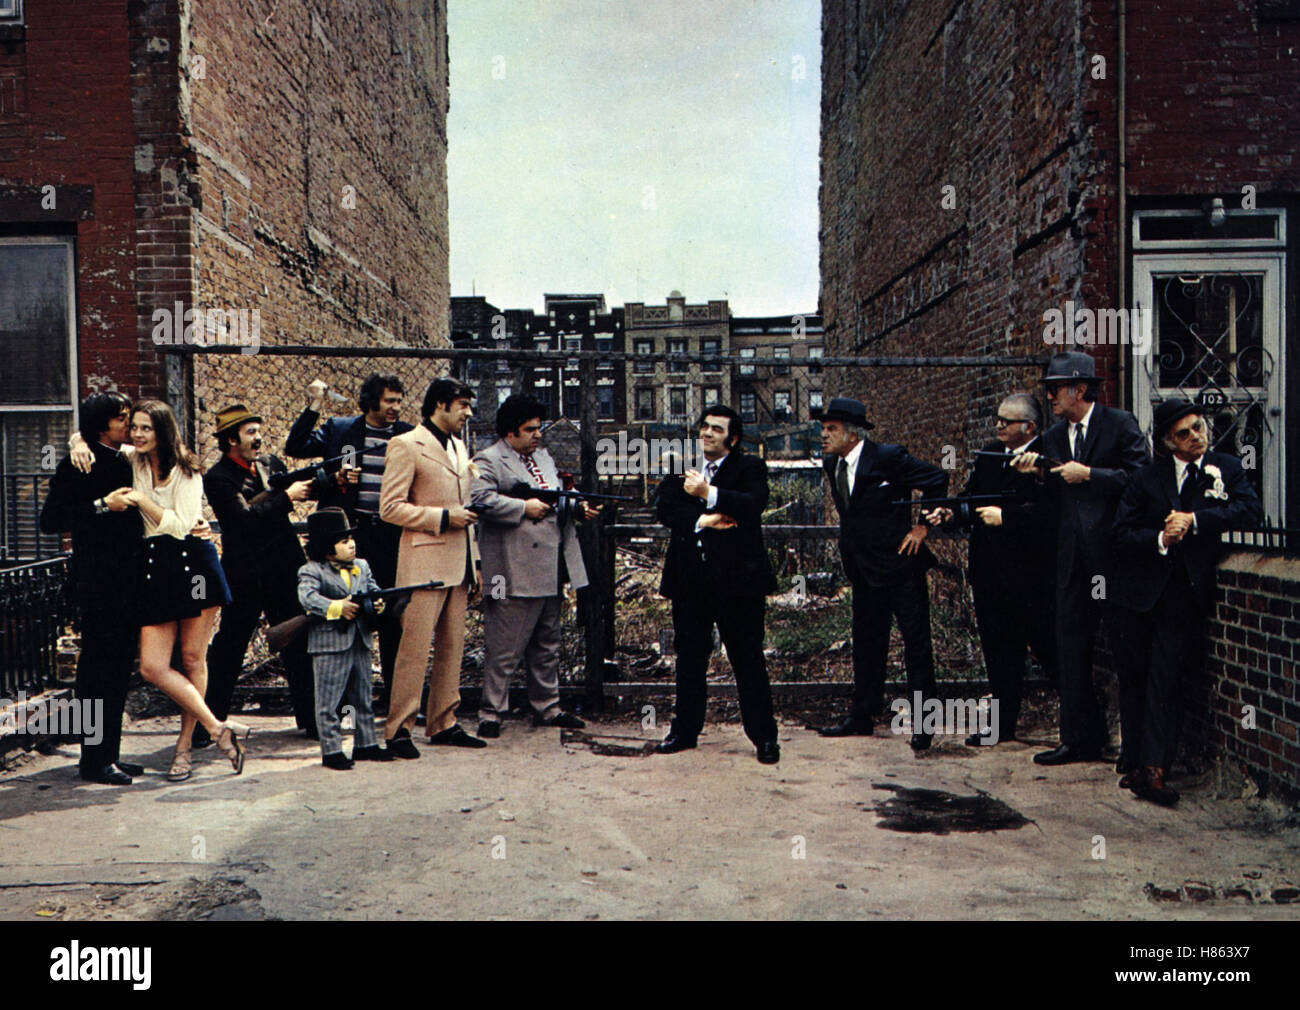 Wo Gangster um die Ecke knallen, (THE GANG THAT COULDN'T SHOOT STRAIGHT) USA 1971, Regie: James Goldstone, ROBERT DE NIRO+ LEIGH TAYLOR-YOUNG (li), JERRY ORBACH, LIONEL STANDER (4.von re), Stichwort: Mafia, Gang, Schusswaffen, Auseinandersetzung Stock Photo